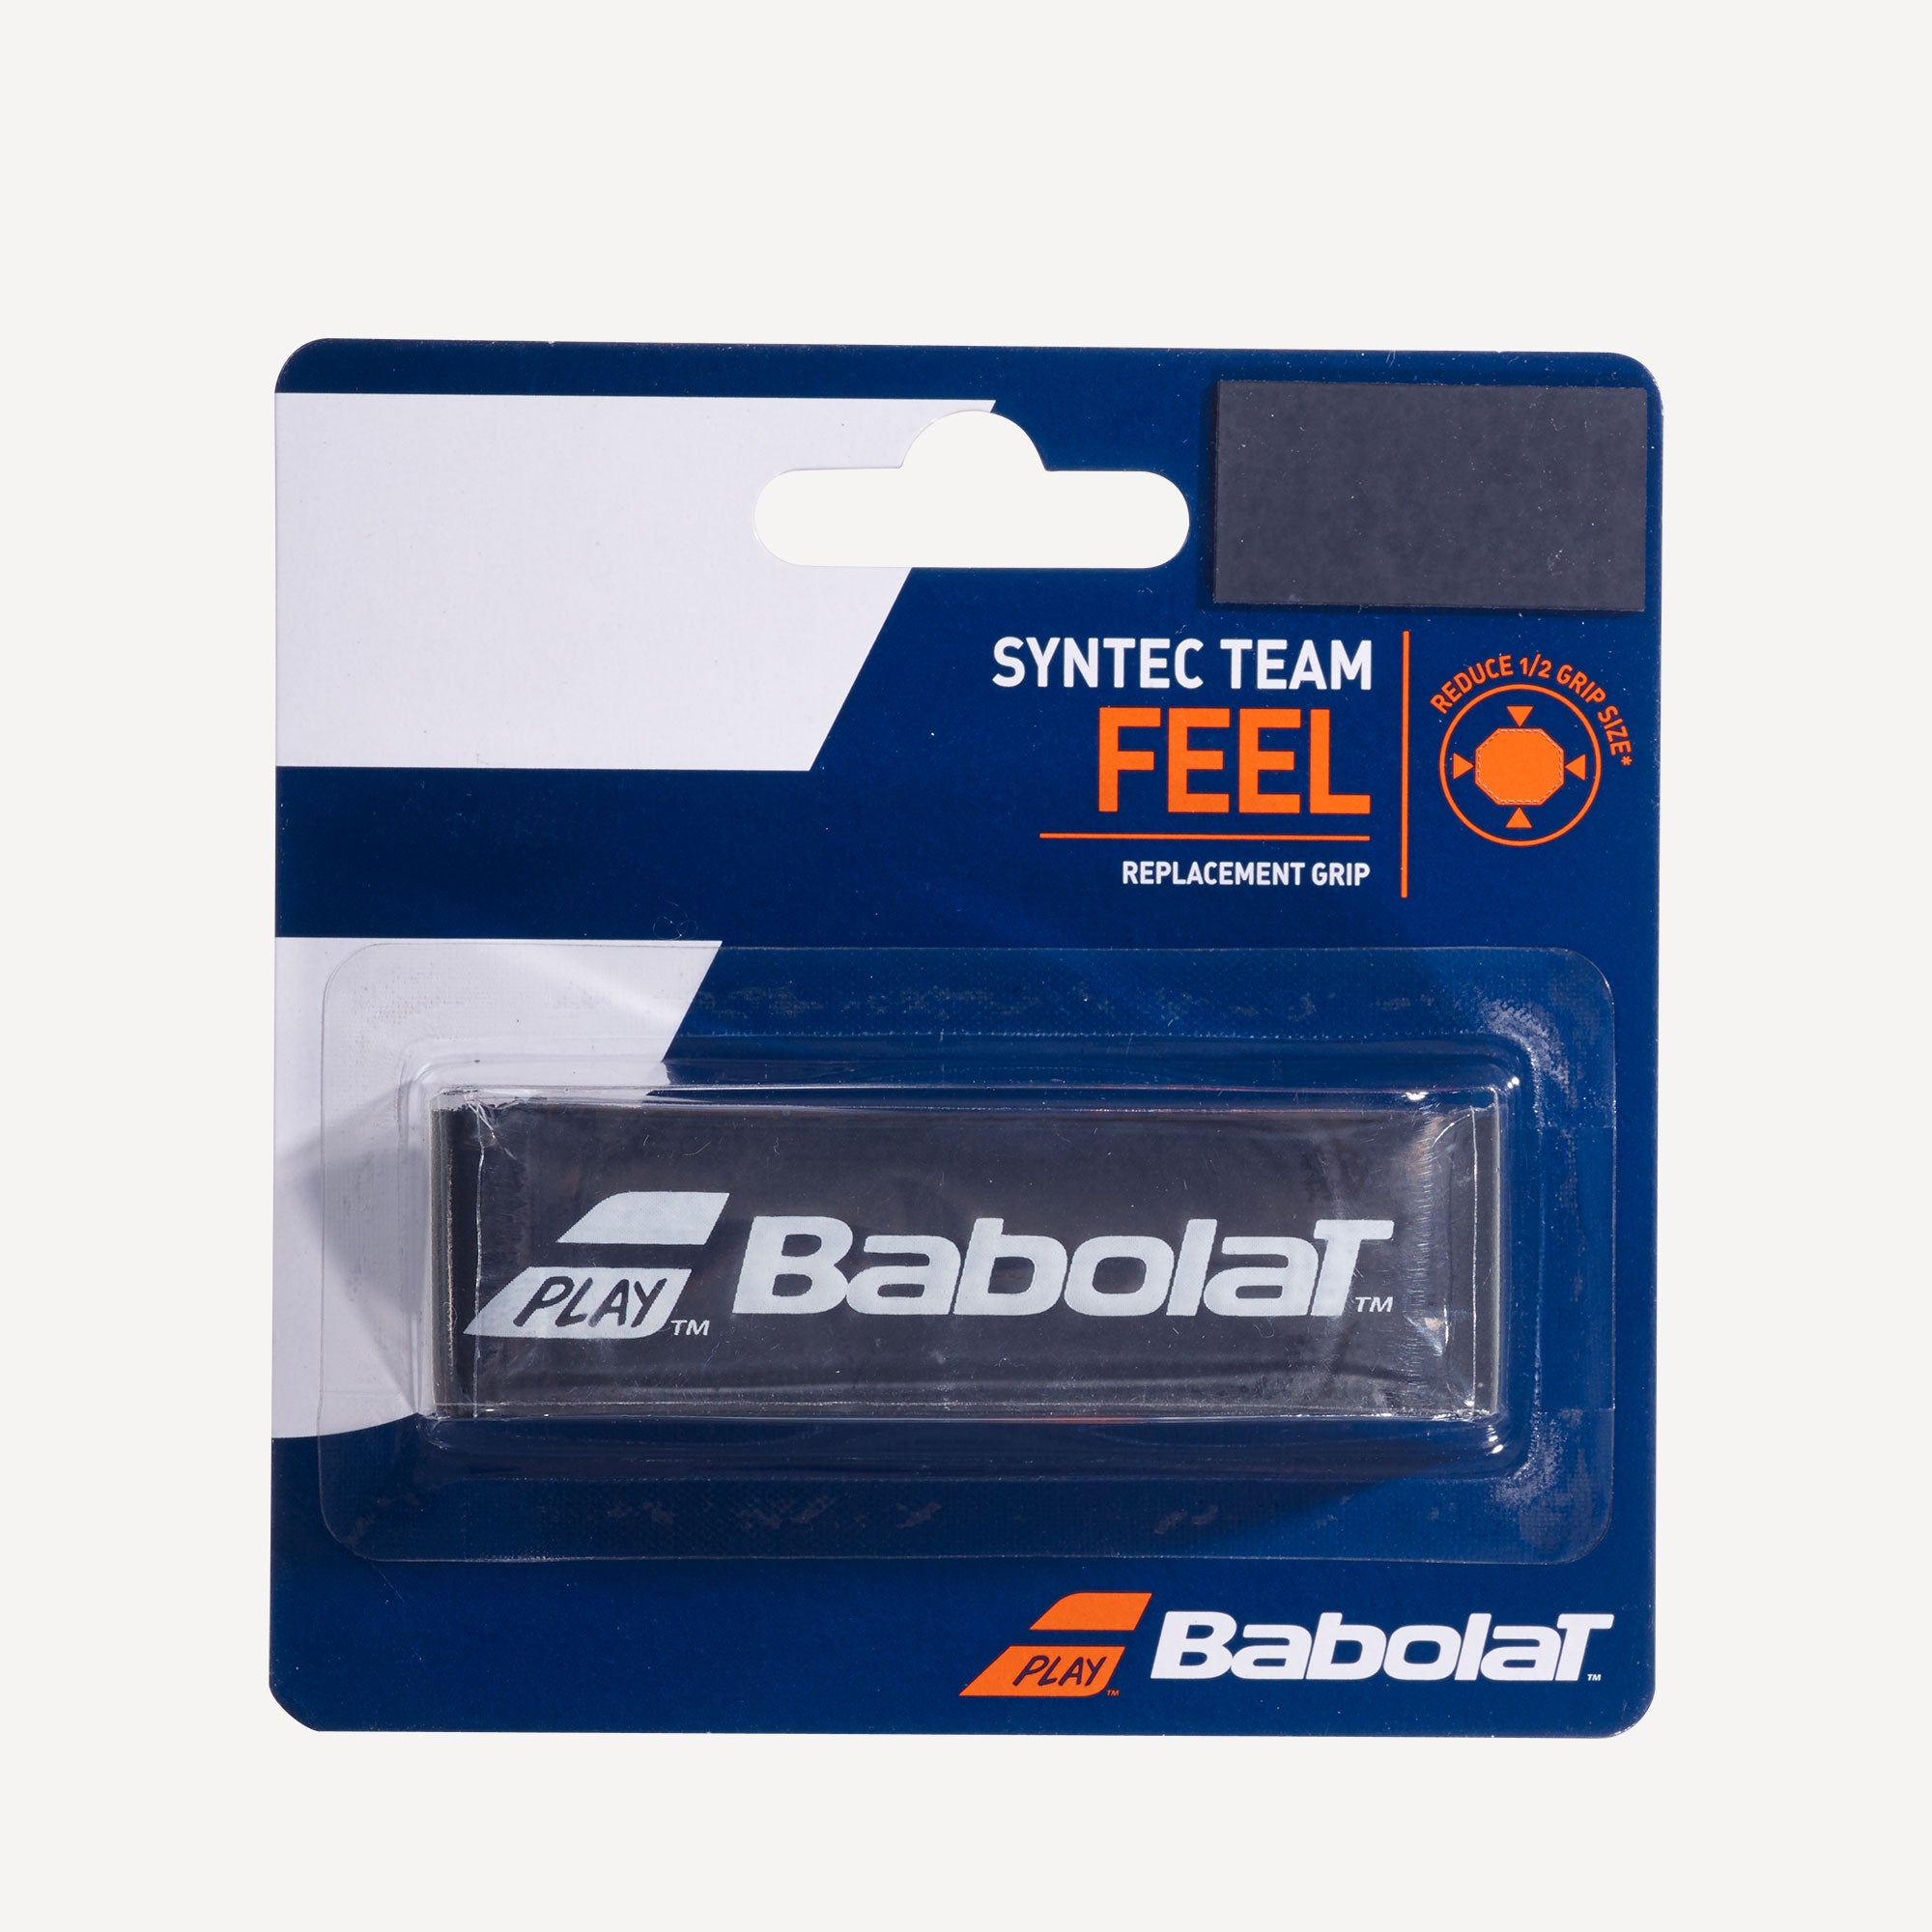 Babolat Syntec Team Tennis Replacement Grip - Black (1)